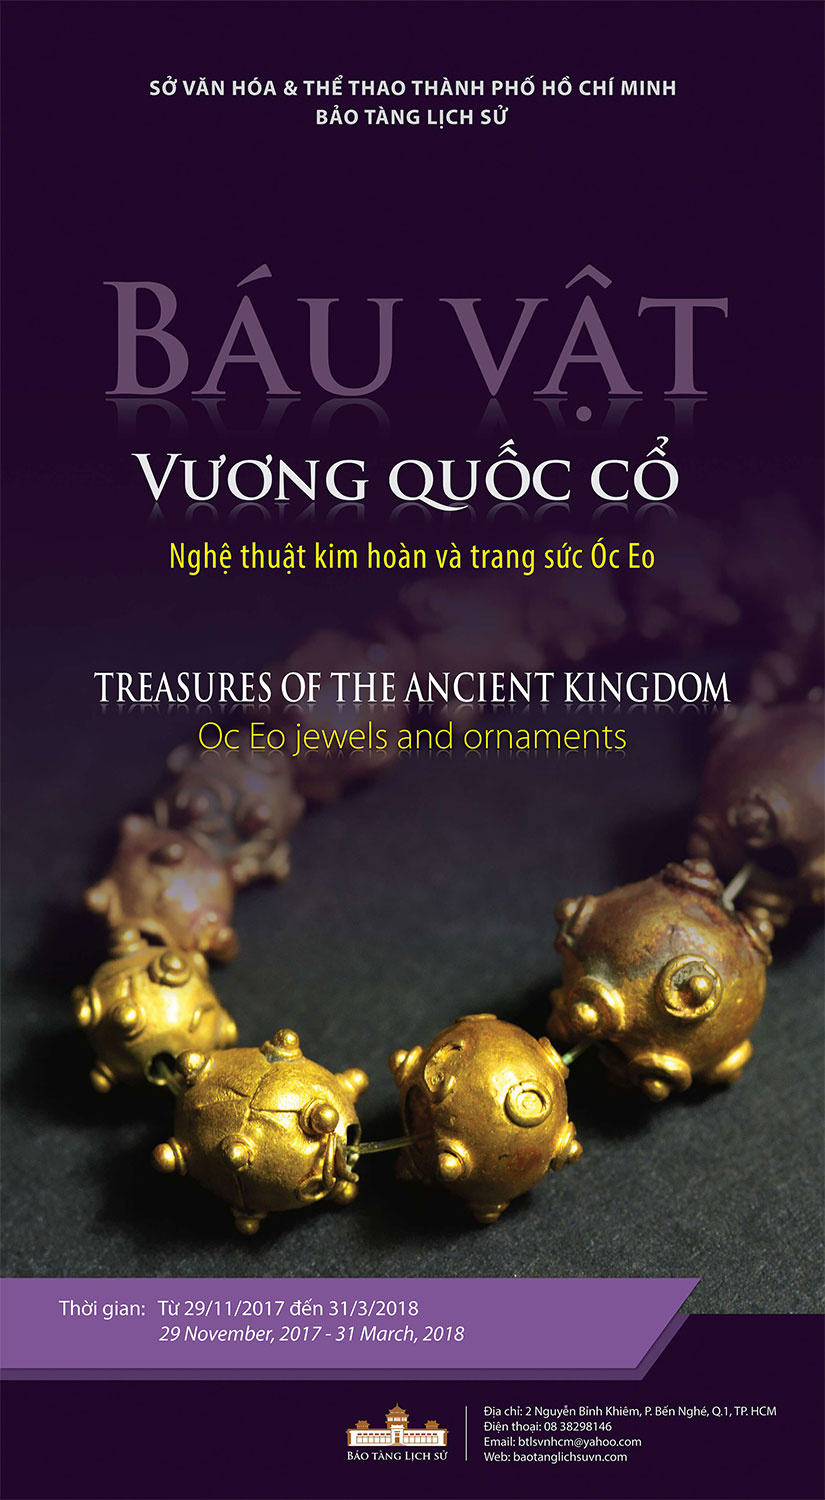 Treasures of the ancient kingdom - Oc Eo jewels and ornament